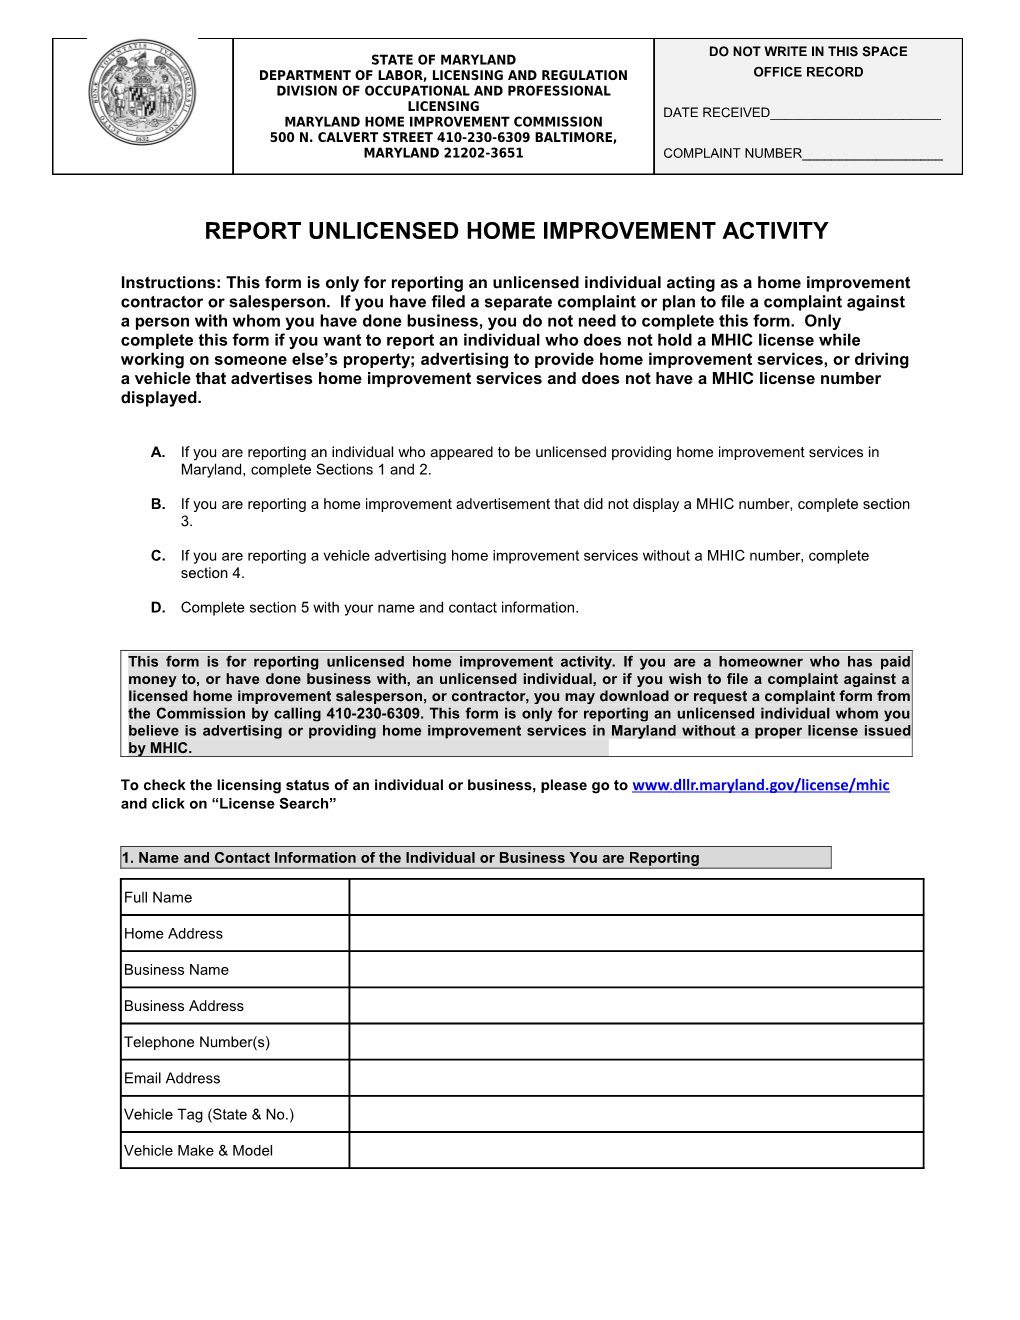 Report Unlicensed Home Improvement Activity